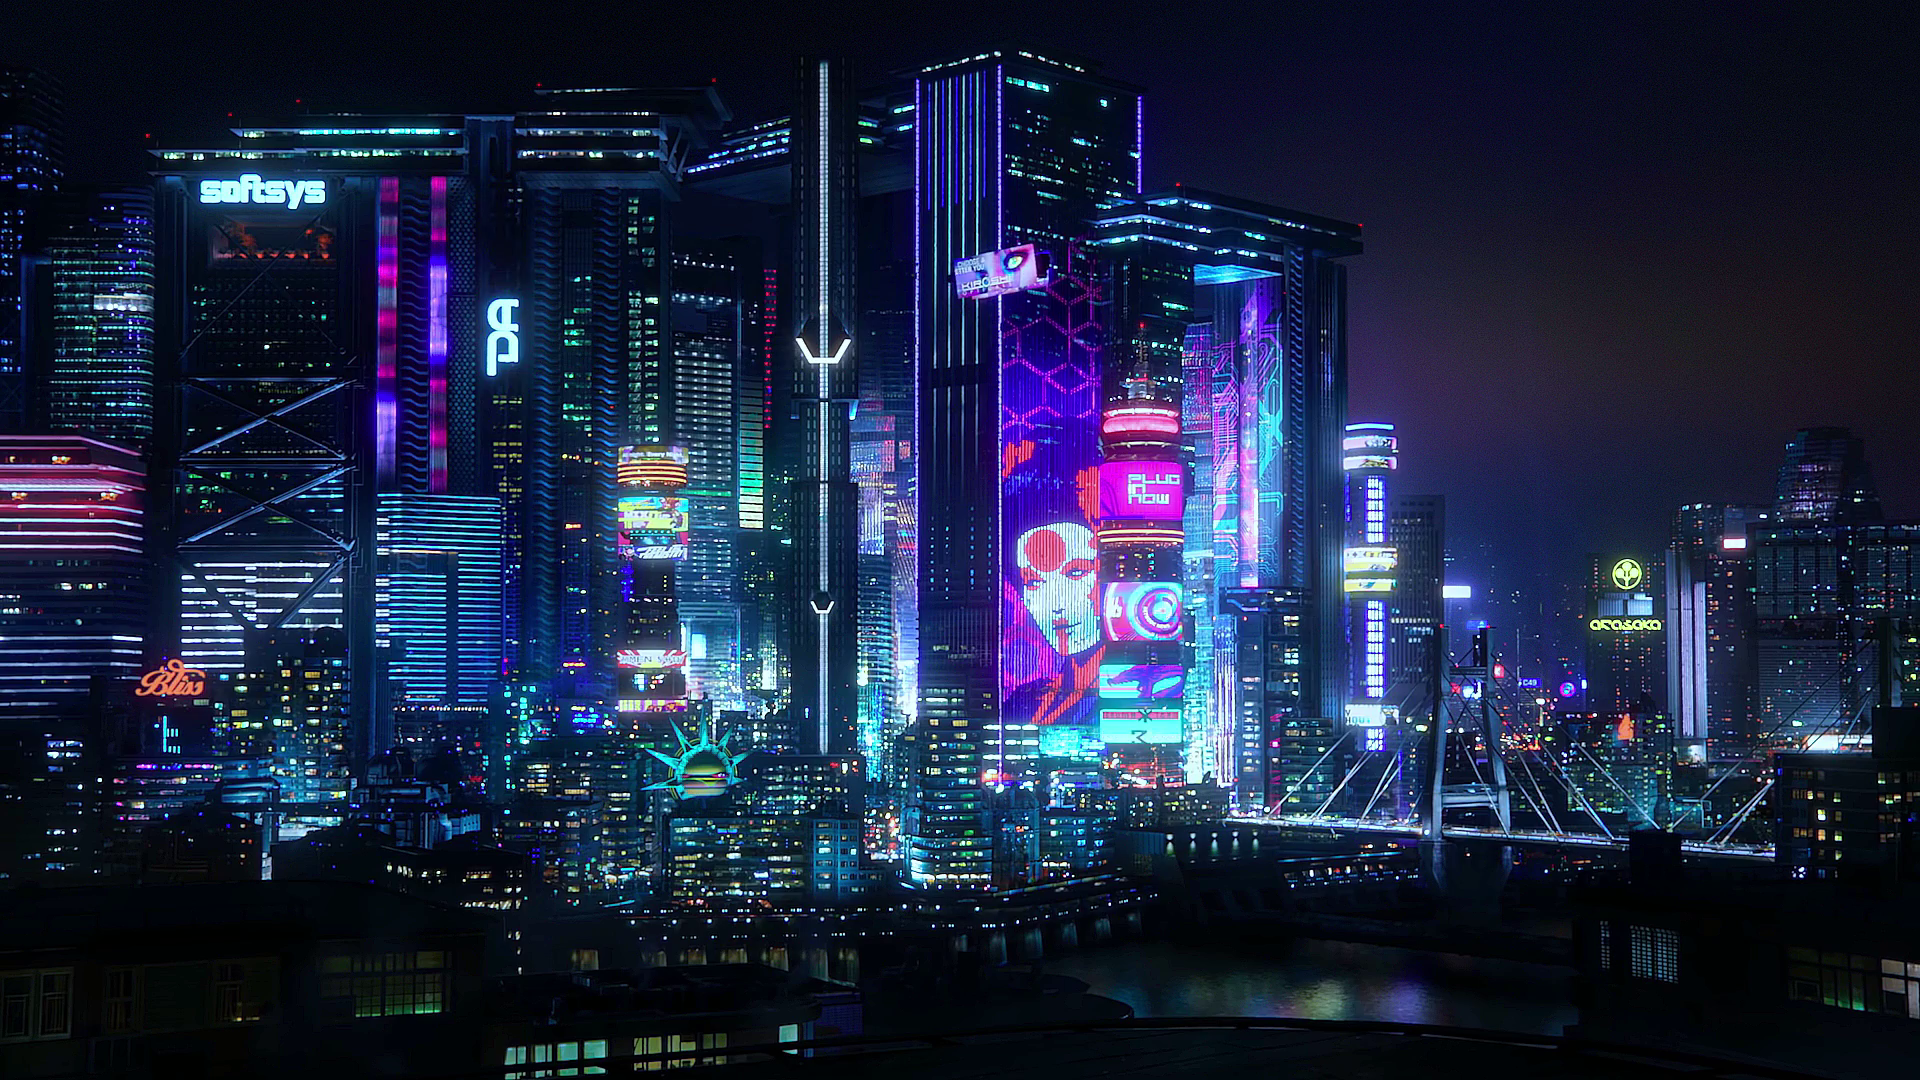 Cyberpunk 2077 Your Night City Illustration by jadenamber on DeviantArt